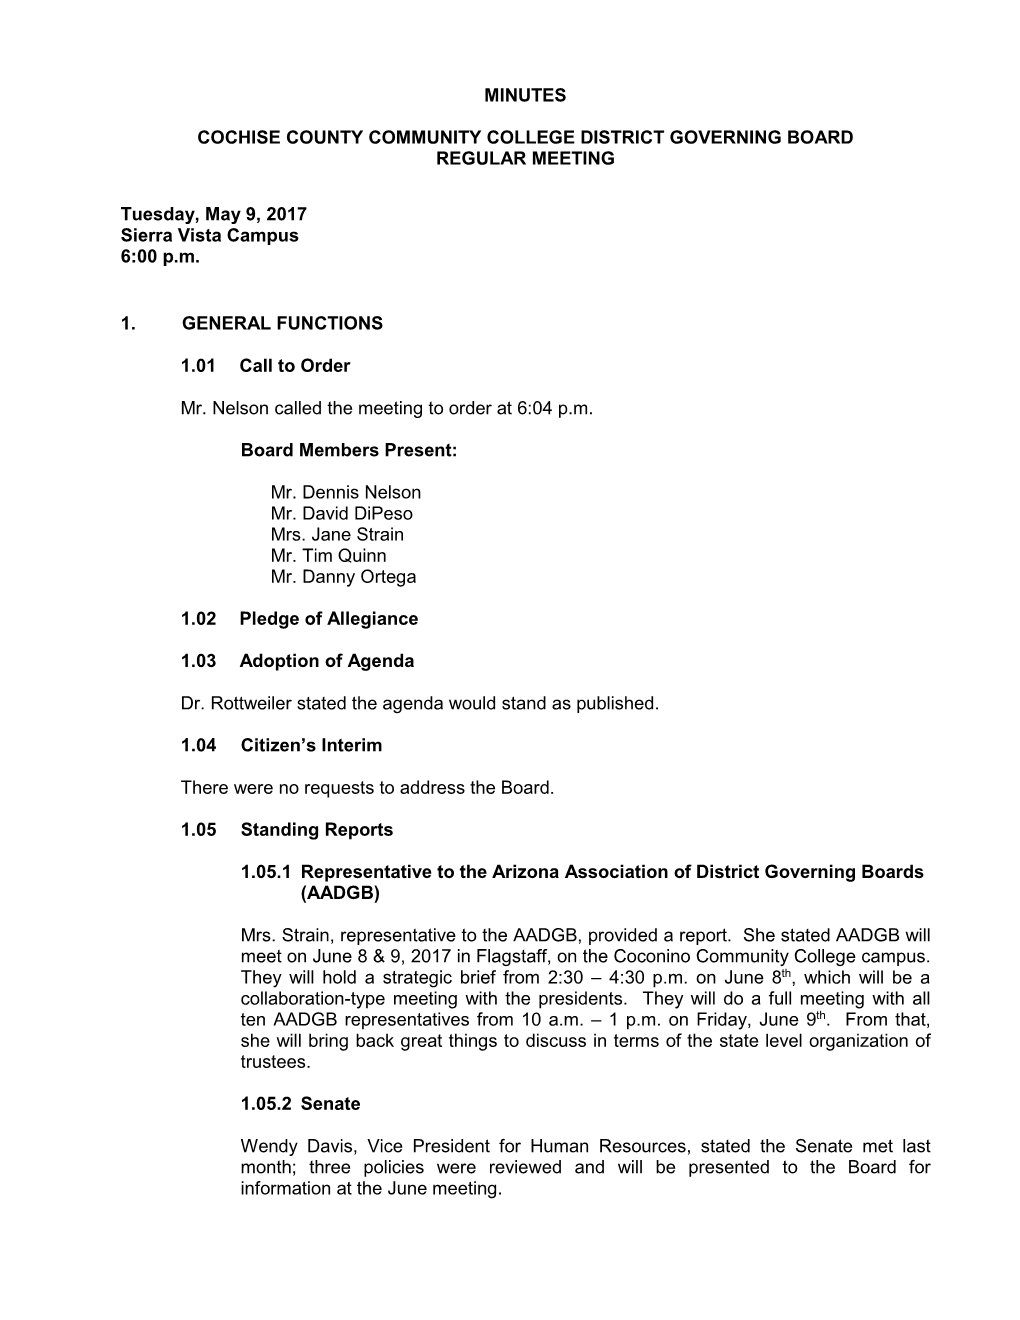 May 9 Regular Meeting Minutes (PDF)